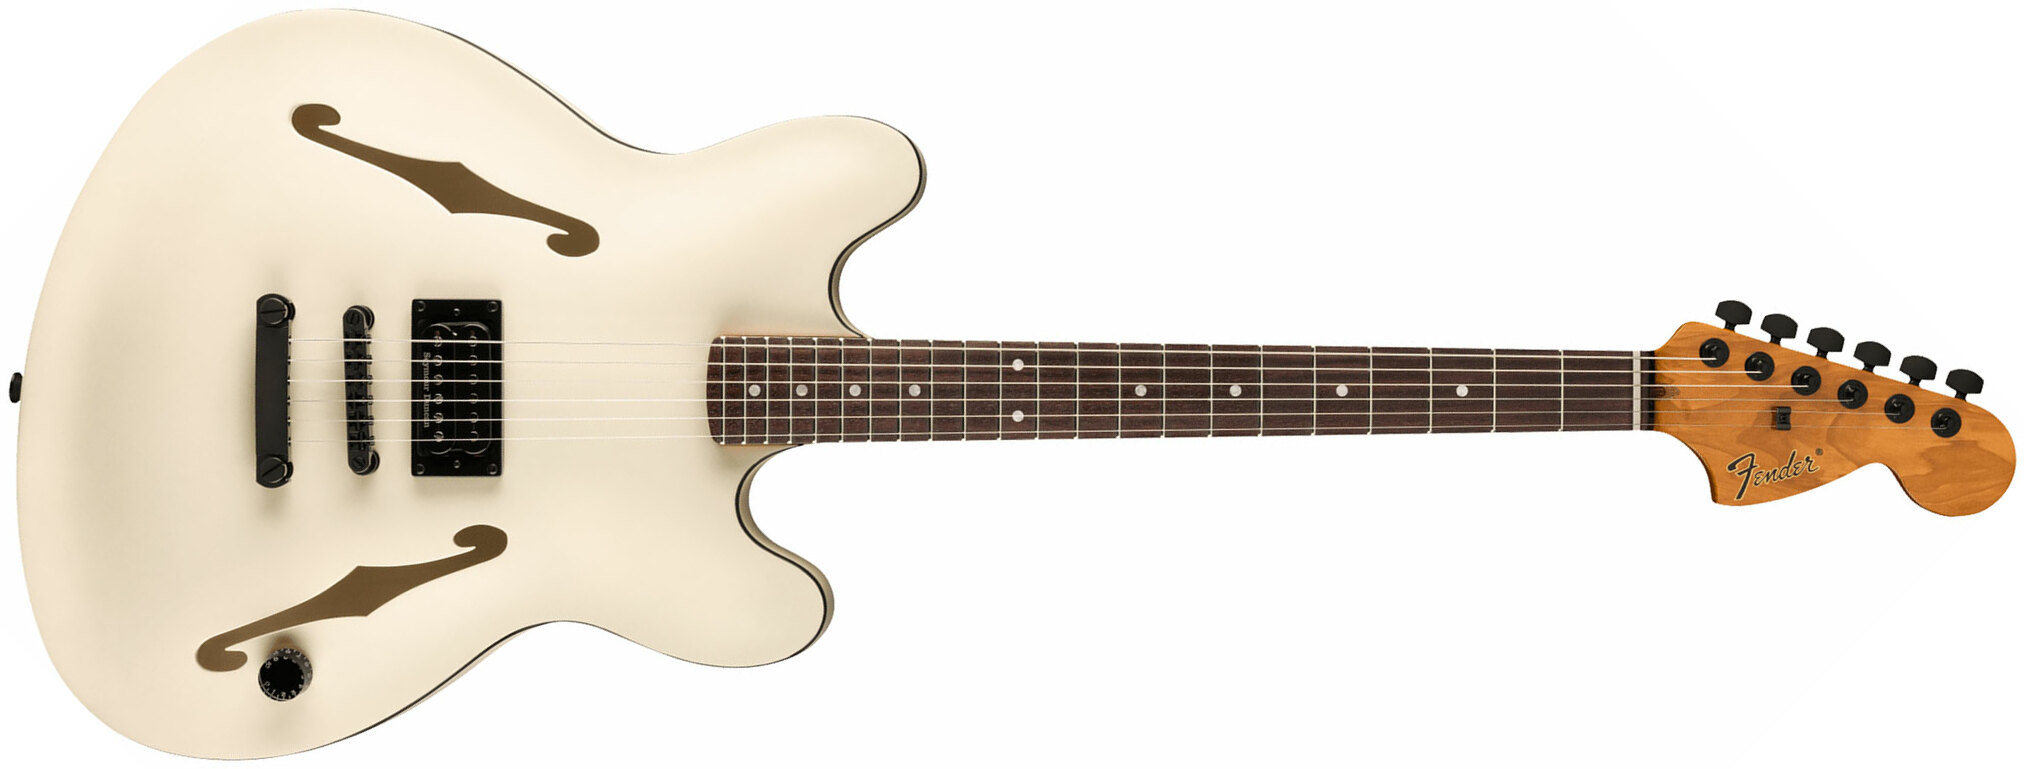 Fender Tom Delonge Starcaster Signature 1h Seymour Duncan Ht Rw - Satin Olympic White - Semi-hollow electric guitar - Main picture